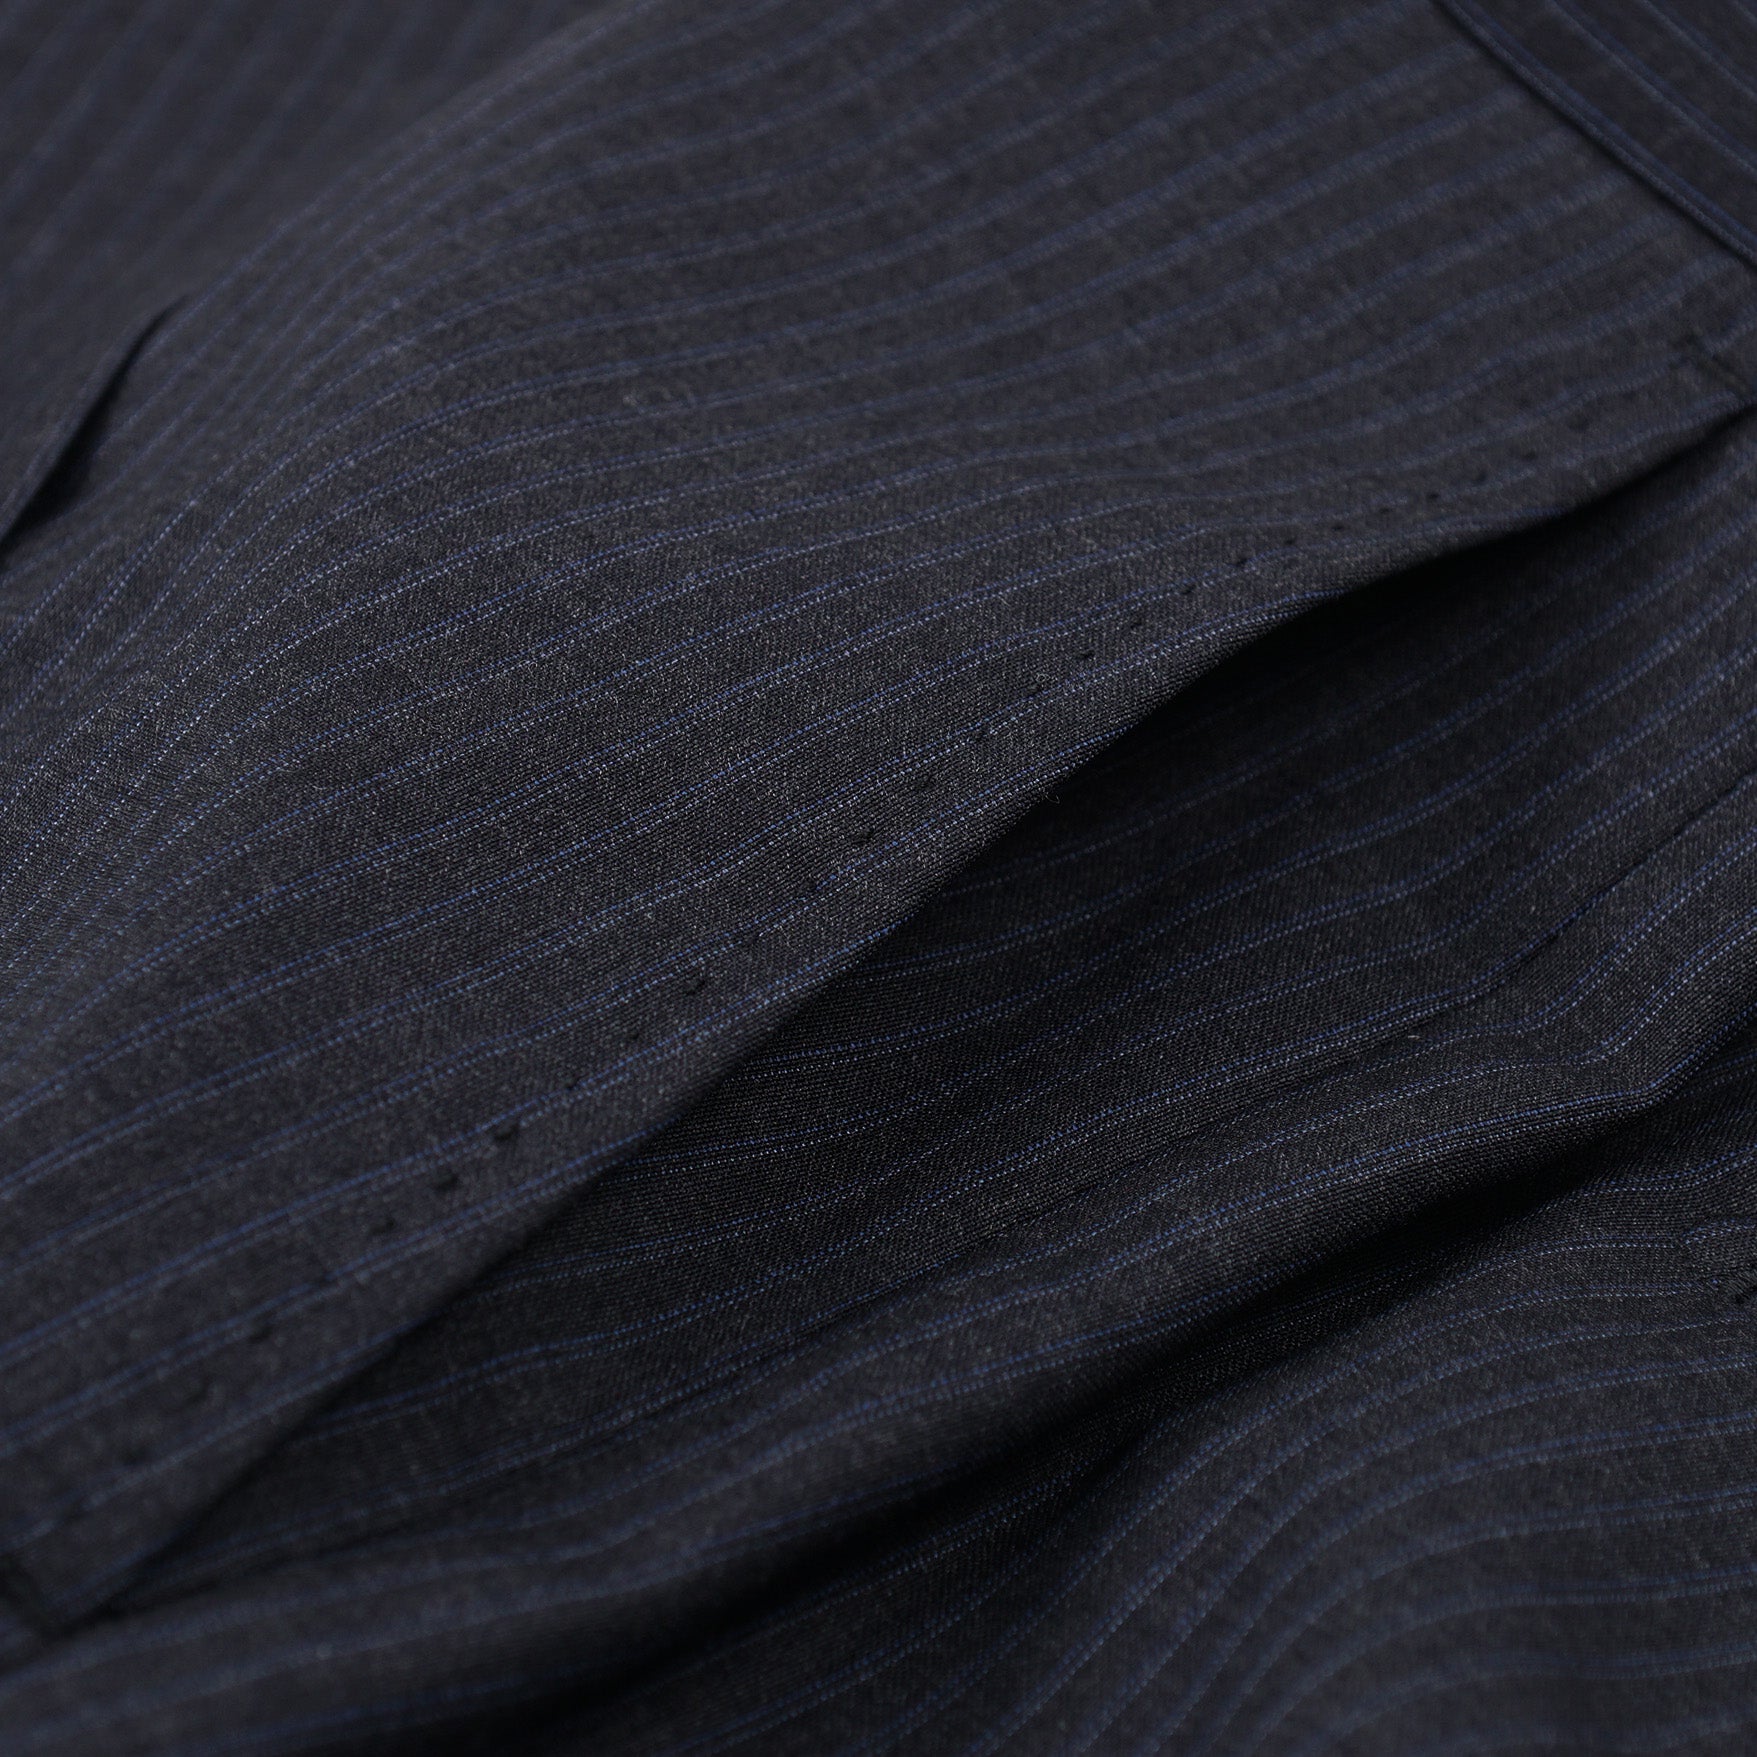 Ermenegildo Zegna Charcoal Gray Striped Wool Suit - Top Shelf Apparel